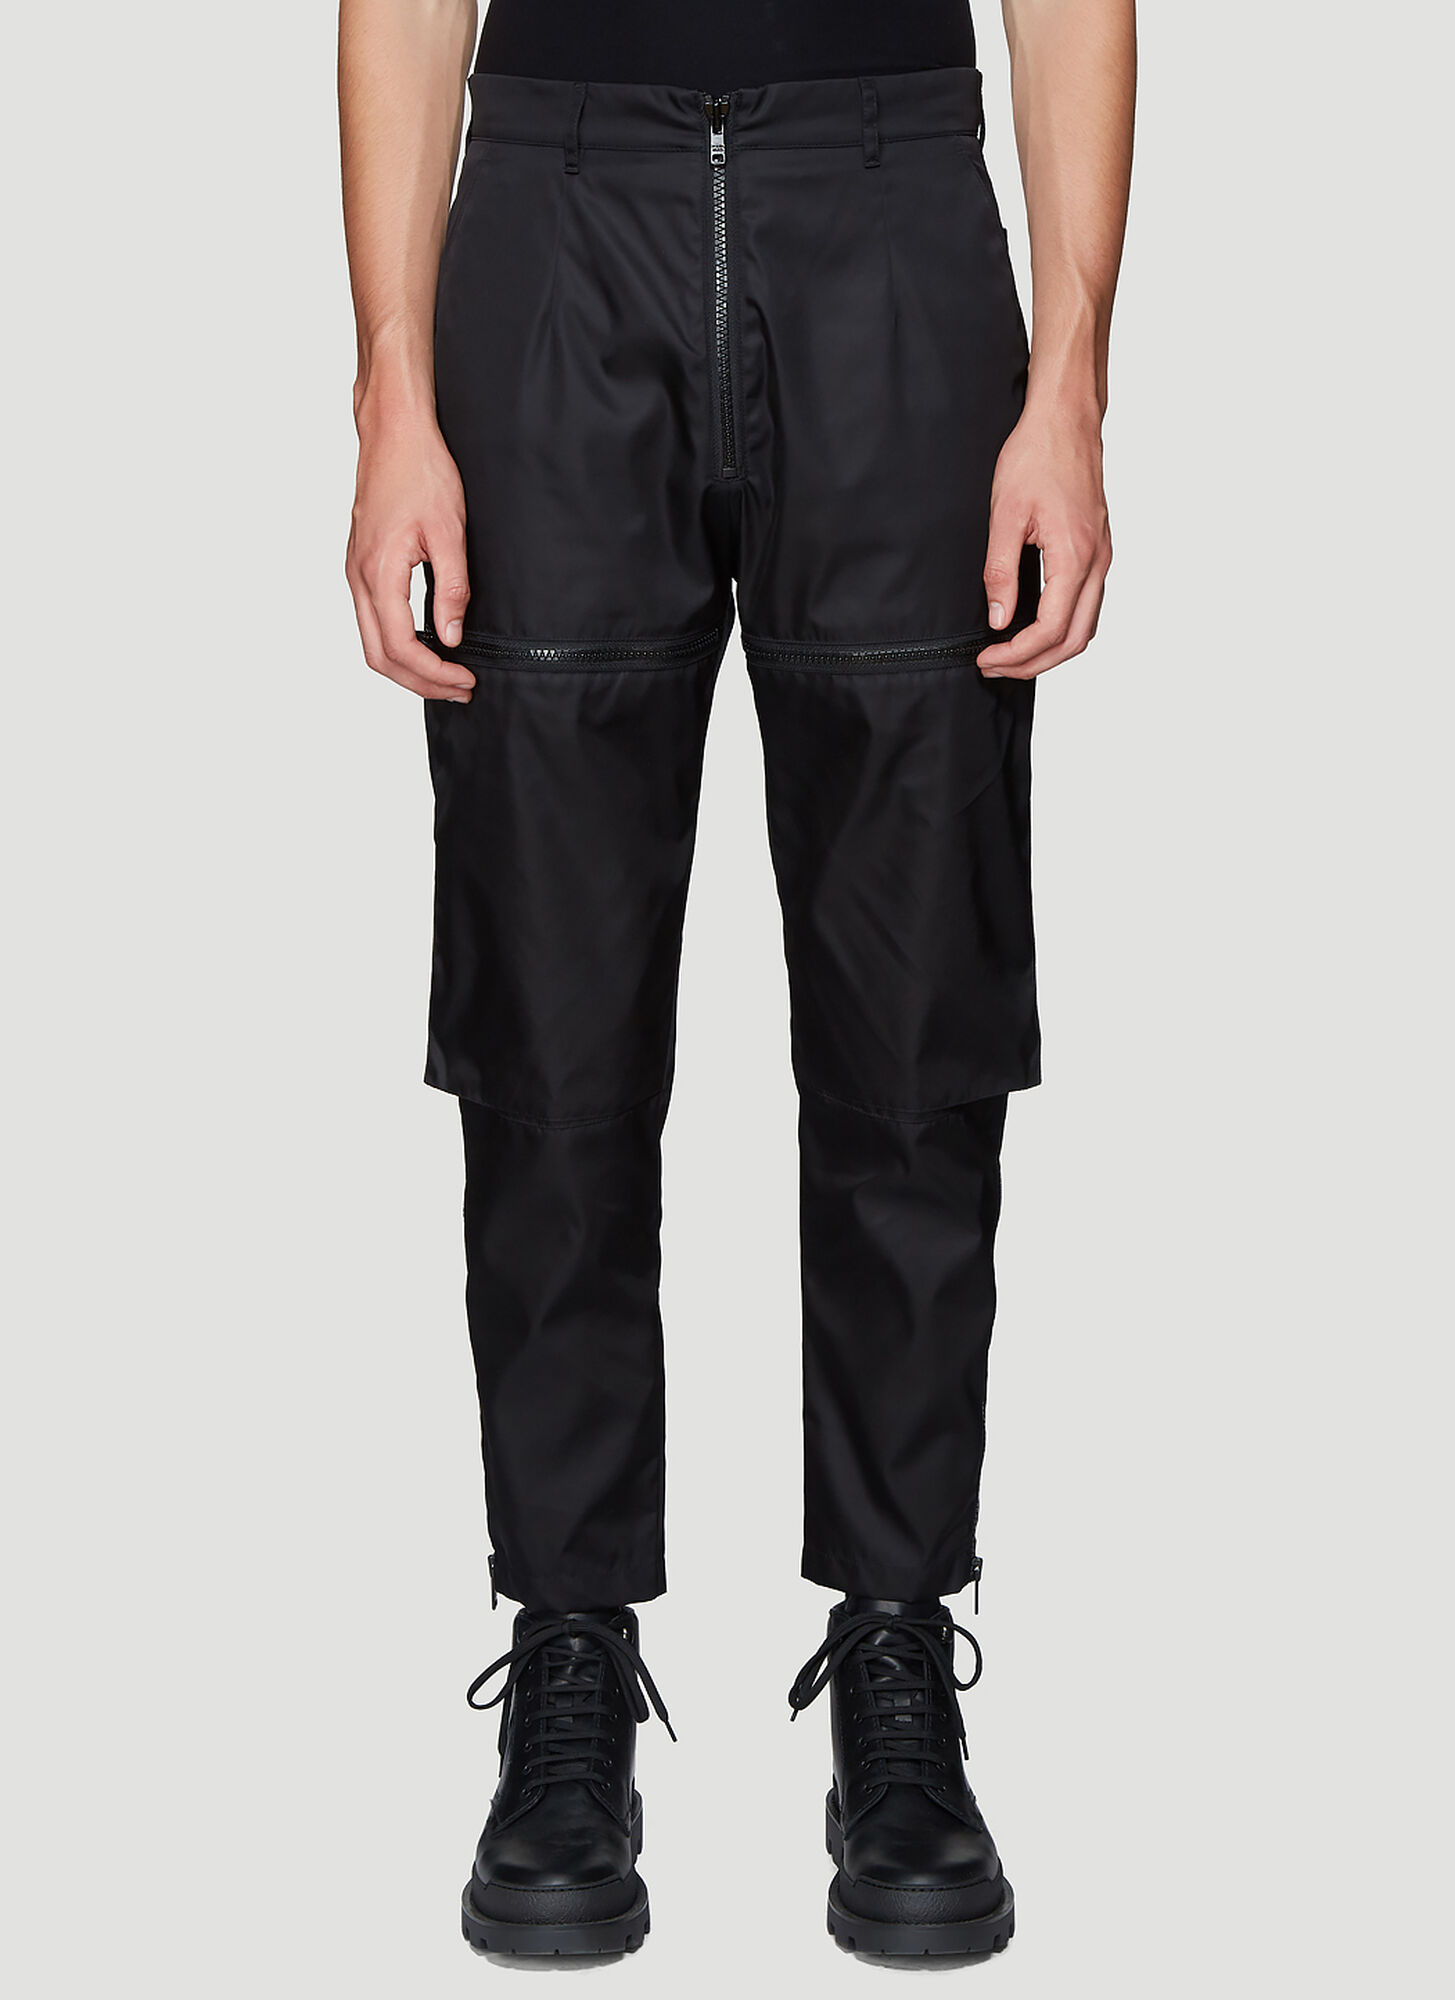 Prada Nylon Zip-Embellished Pants in Black size EU – 50 | The Fashionisto